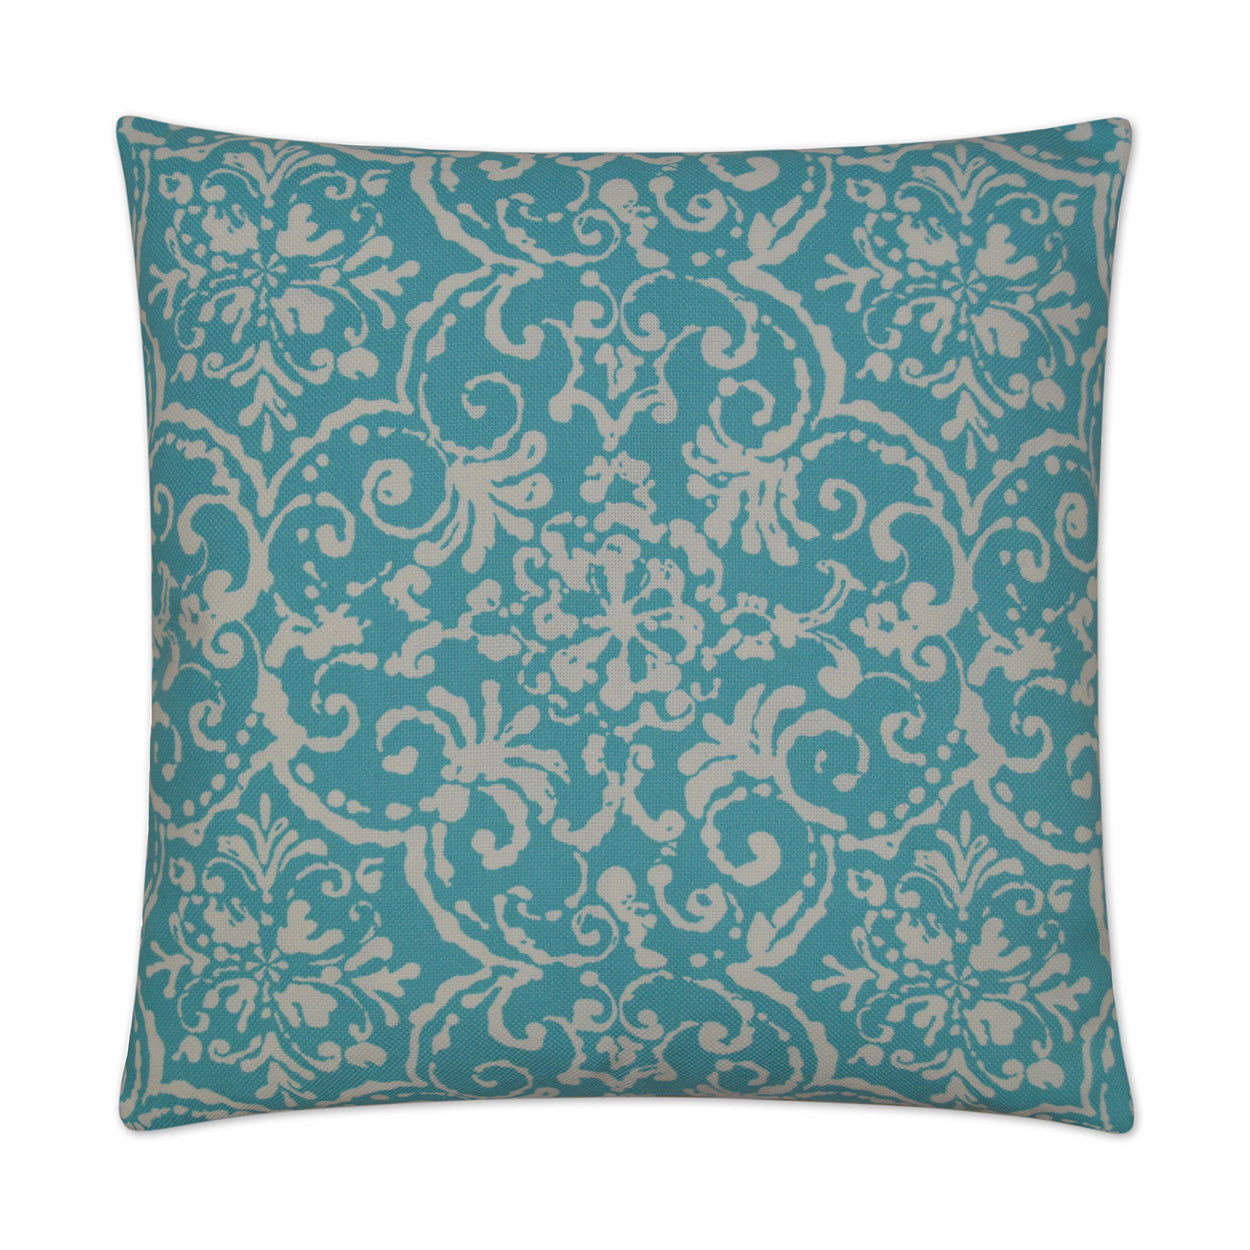 Outdoor Print Affair Pillow - Turquoise